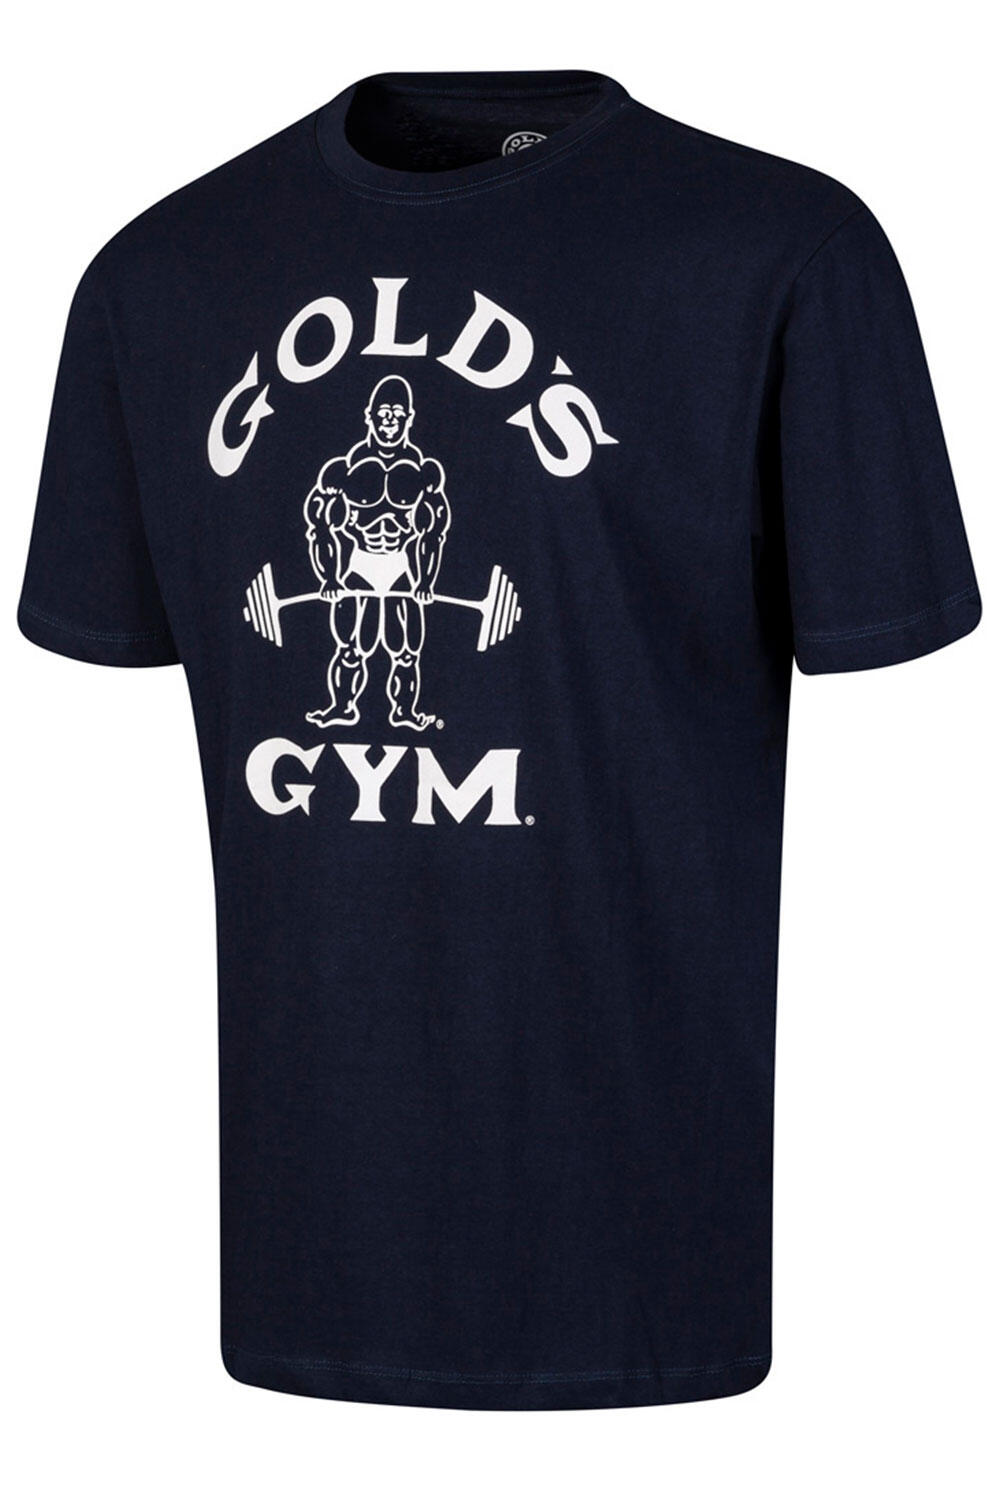 Men's Gold's Gym Classic Muscle Joe Print T-Shirt 1/4